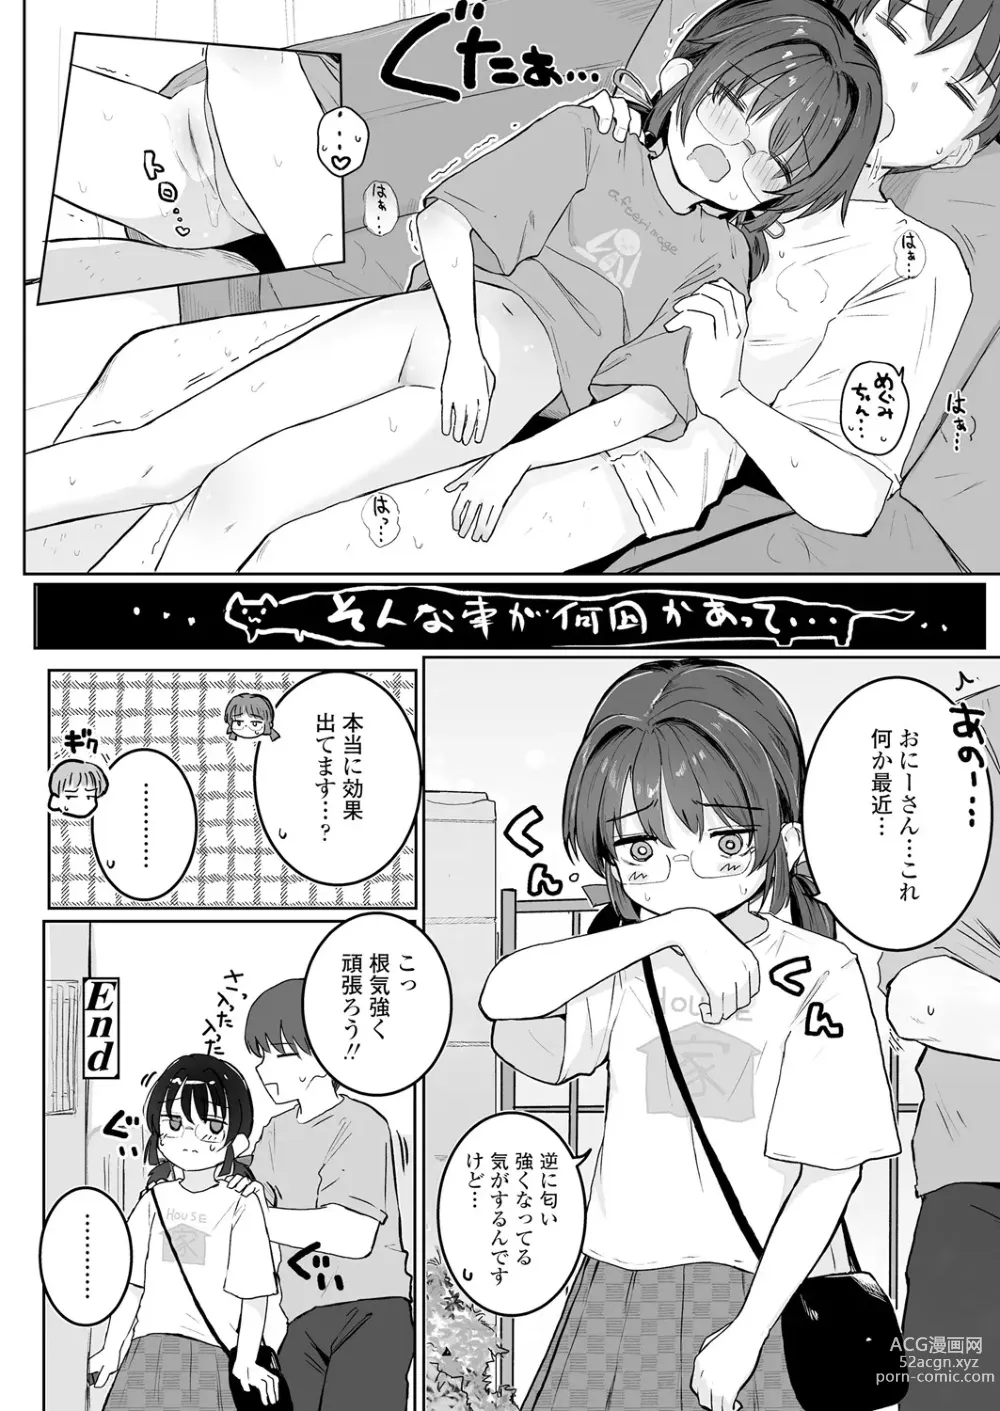 Page 26 of manga めぐみちゃんの気になるコト